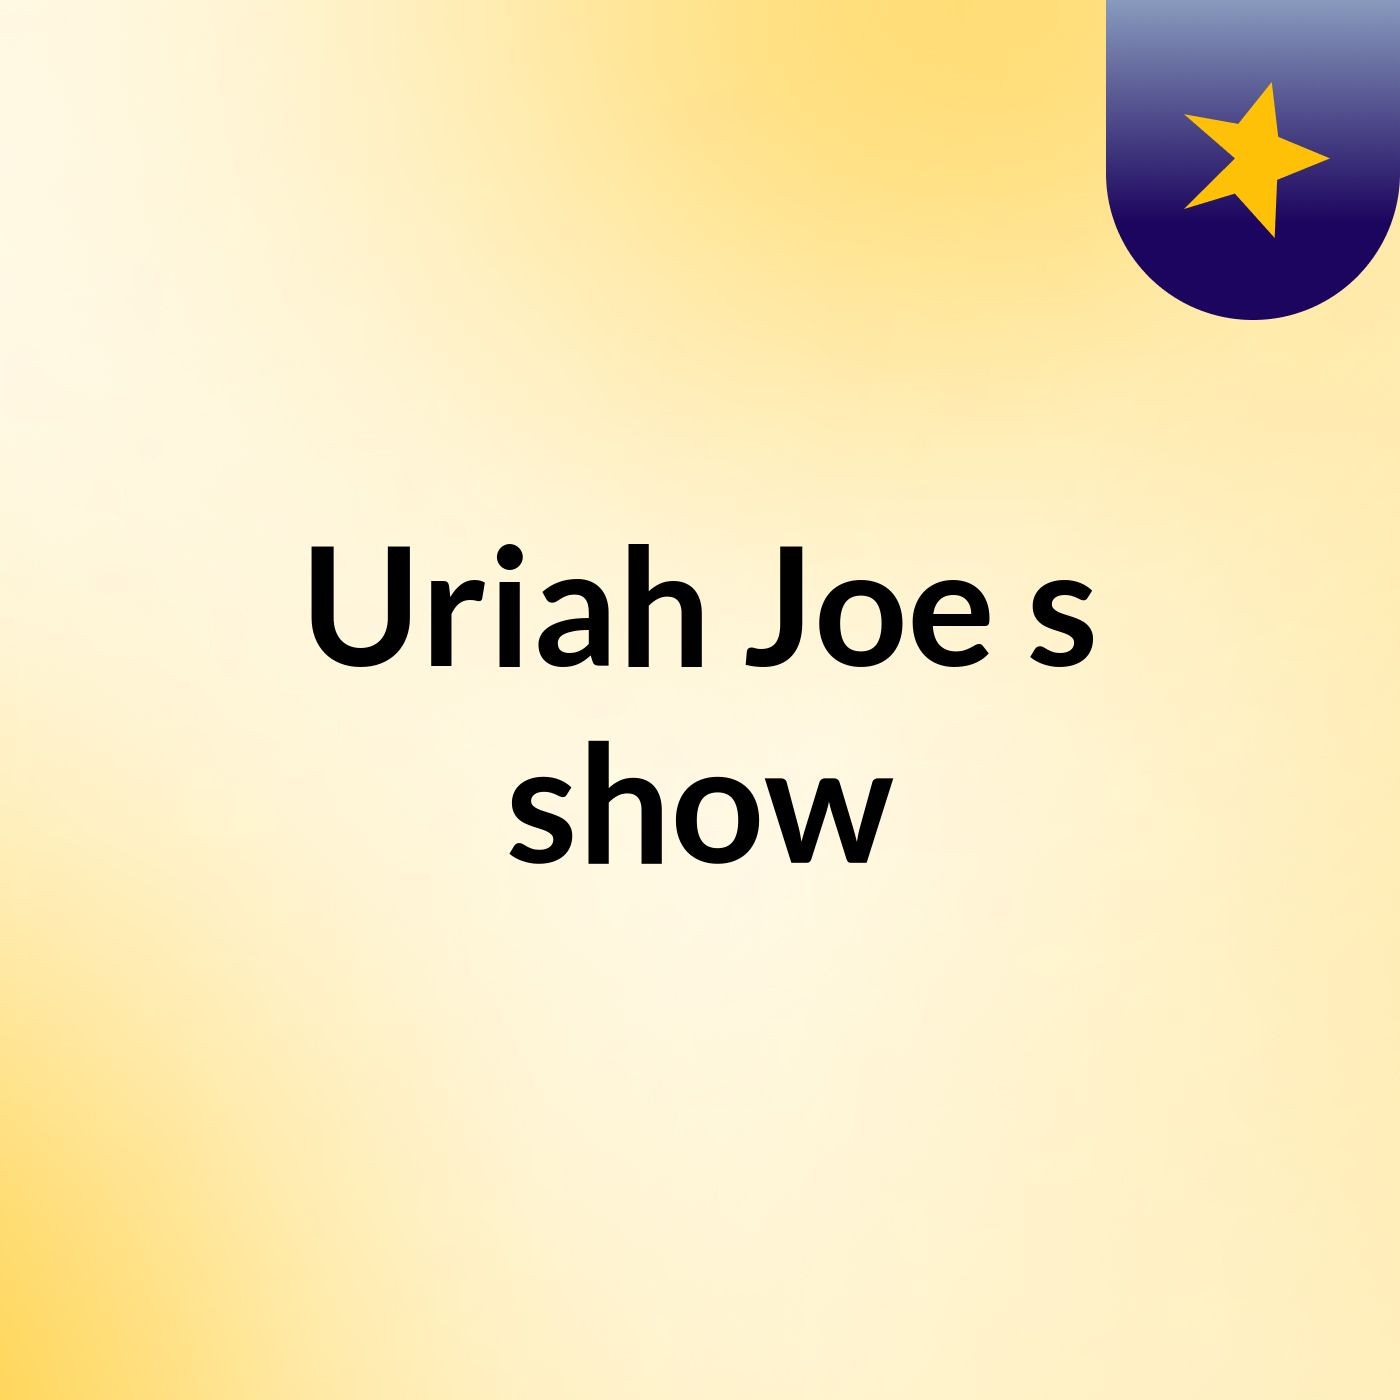 Uriah Joe's show